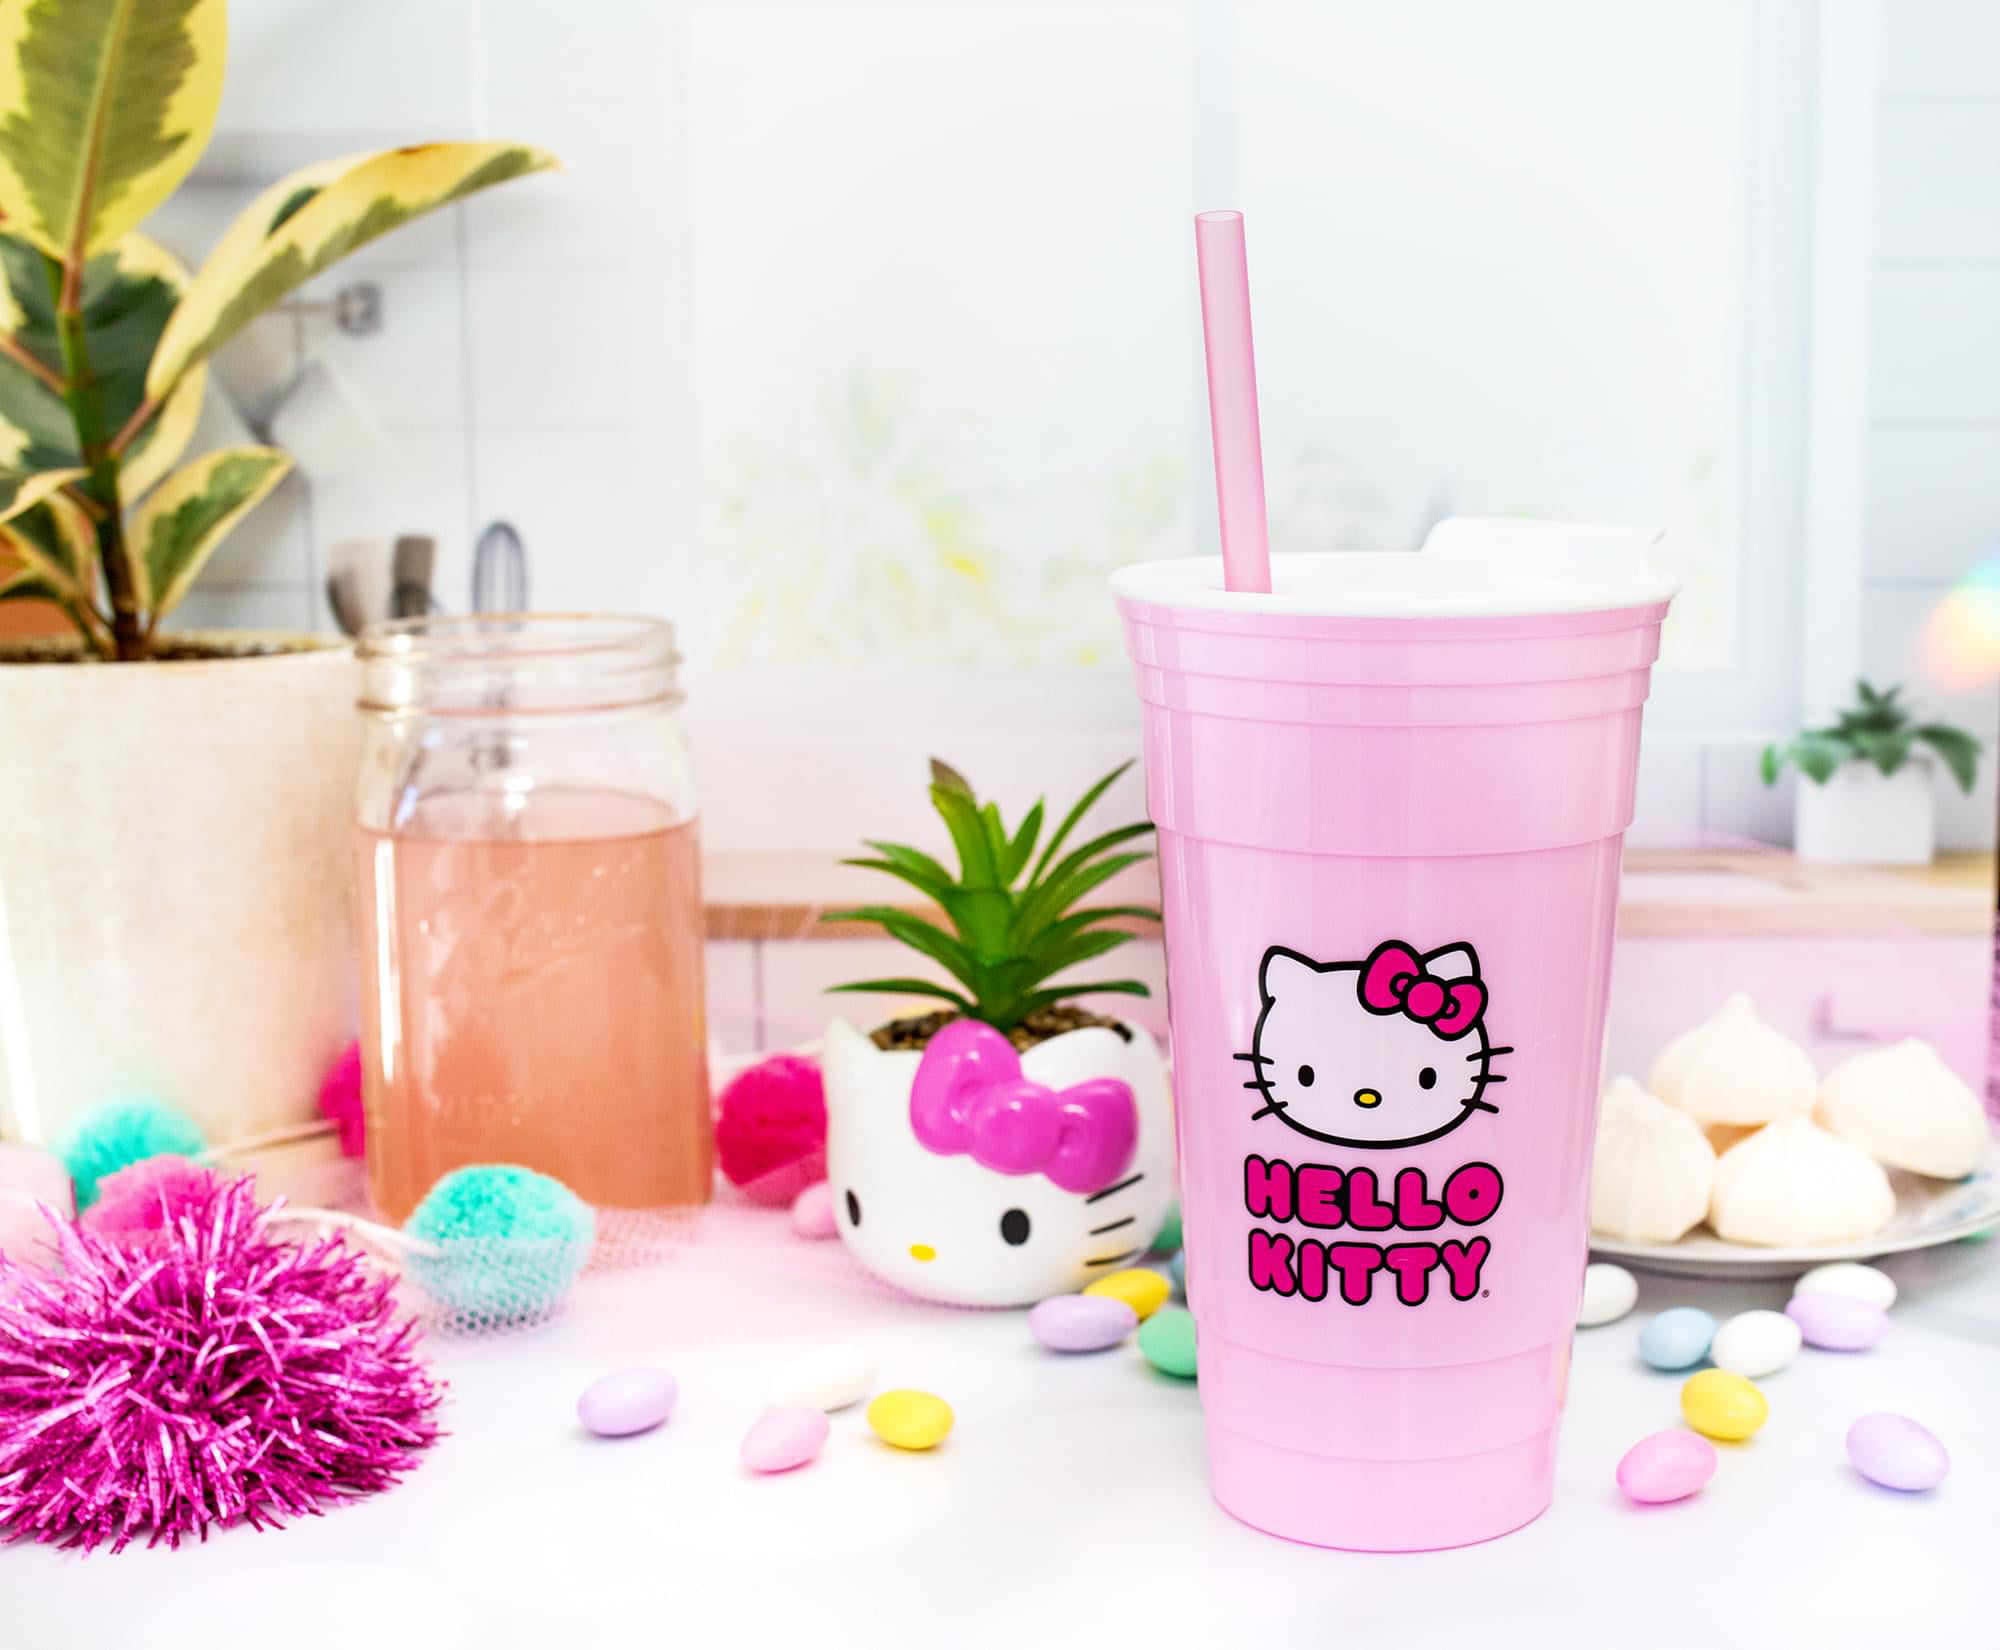 NWT Sanrio Hello Kitty Pink Plastic Travel Tumbler w/ Lid Straw 32oz